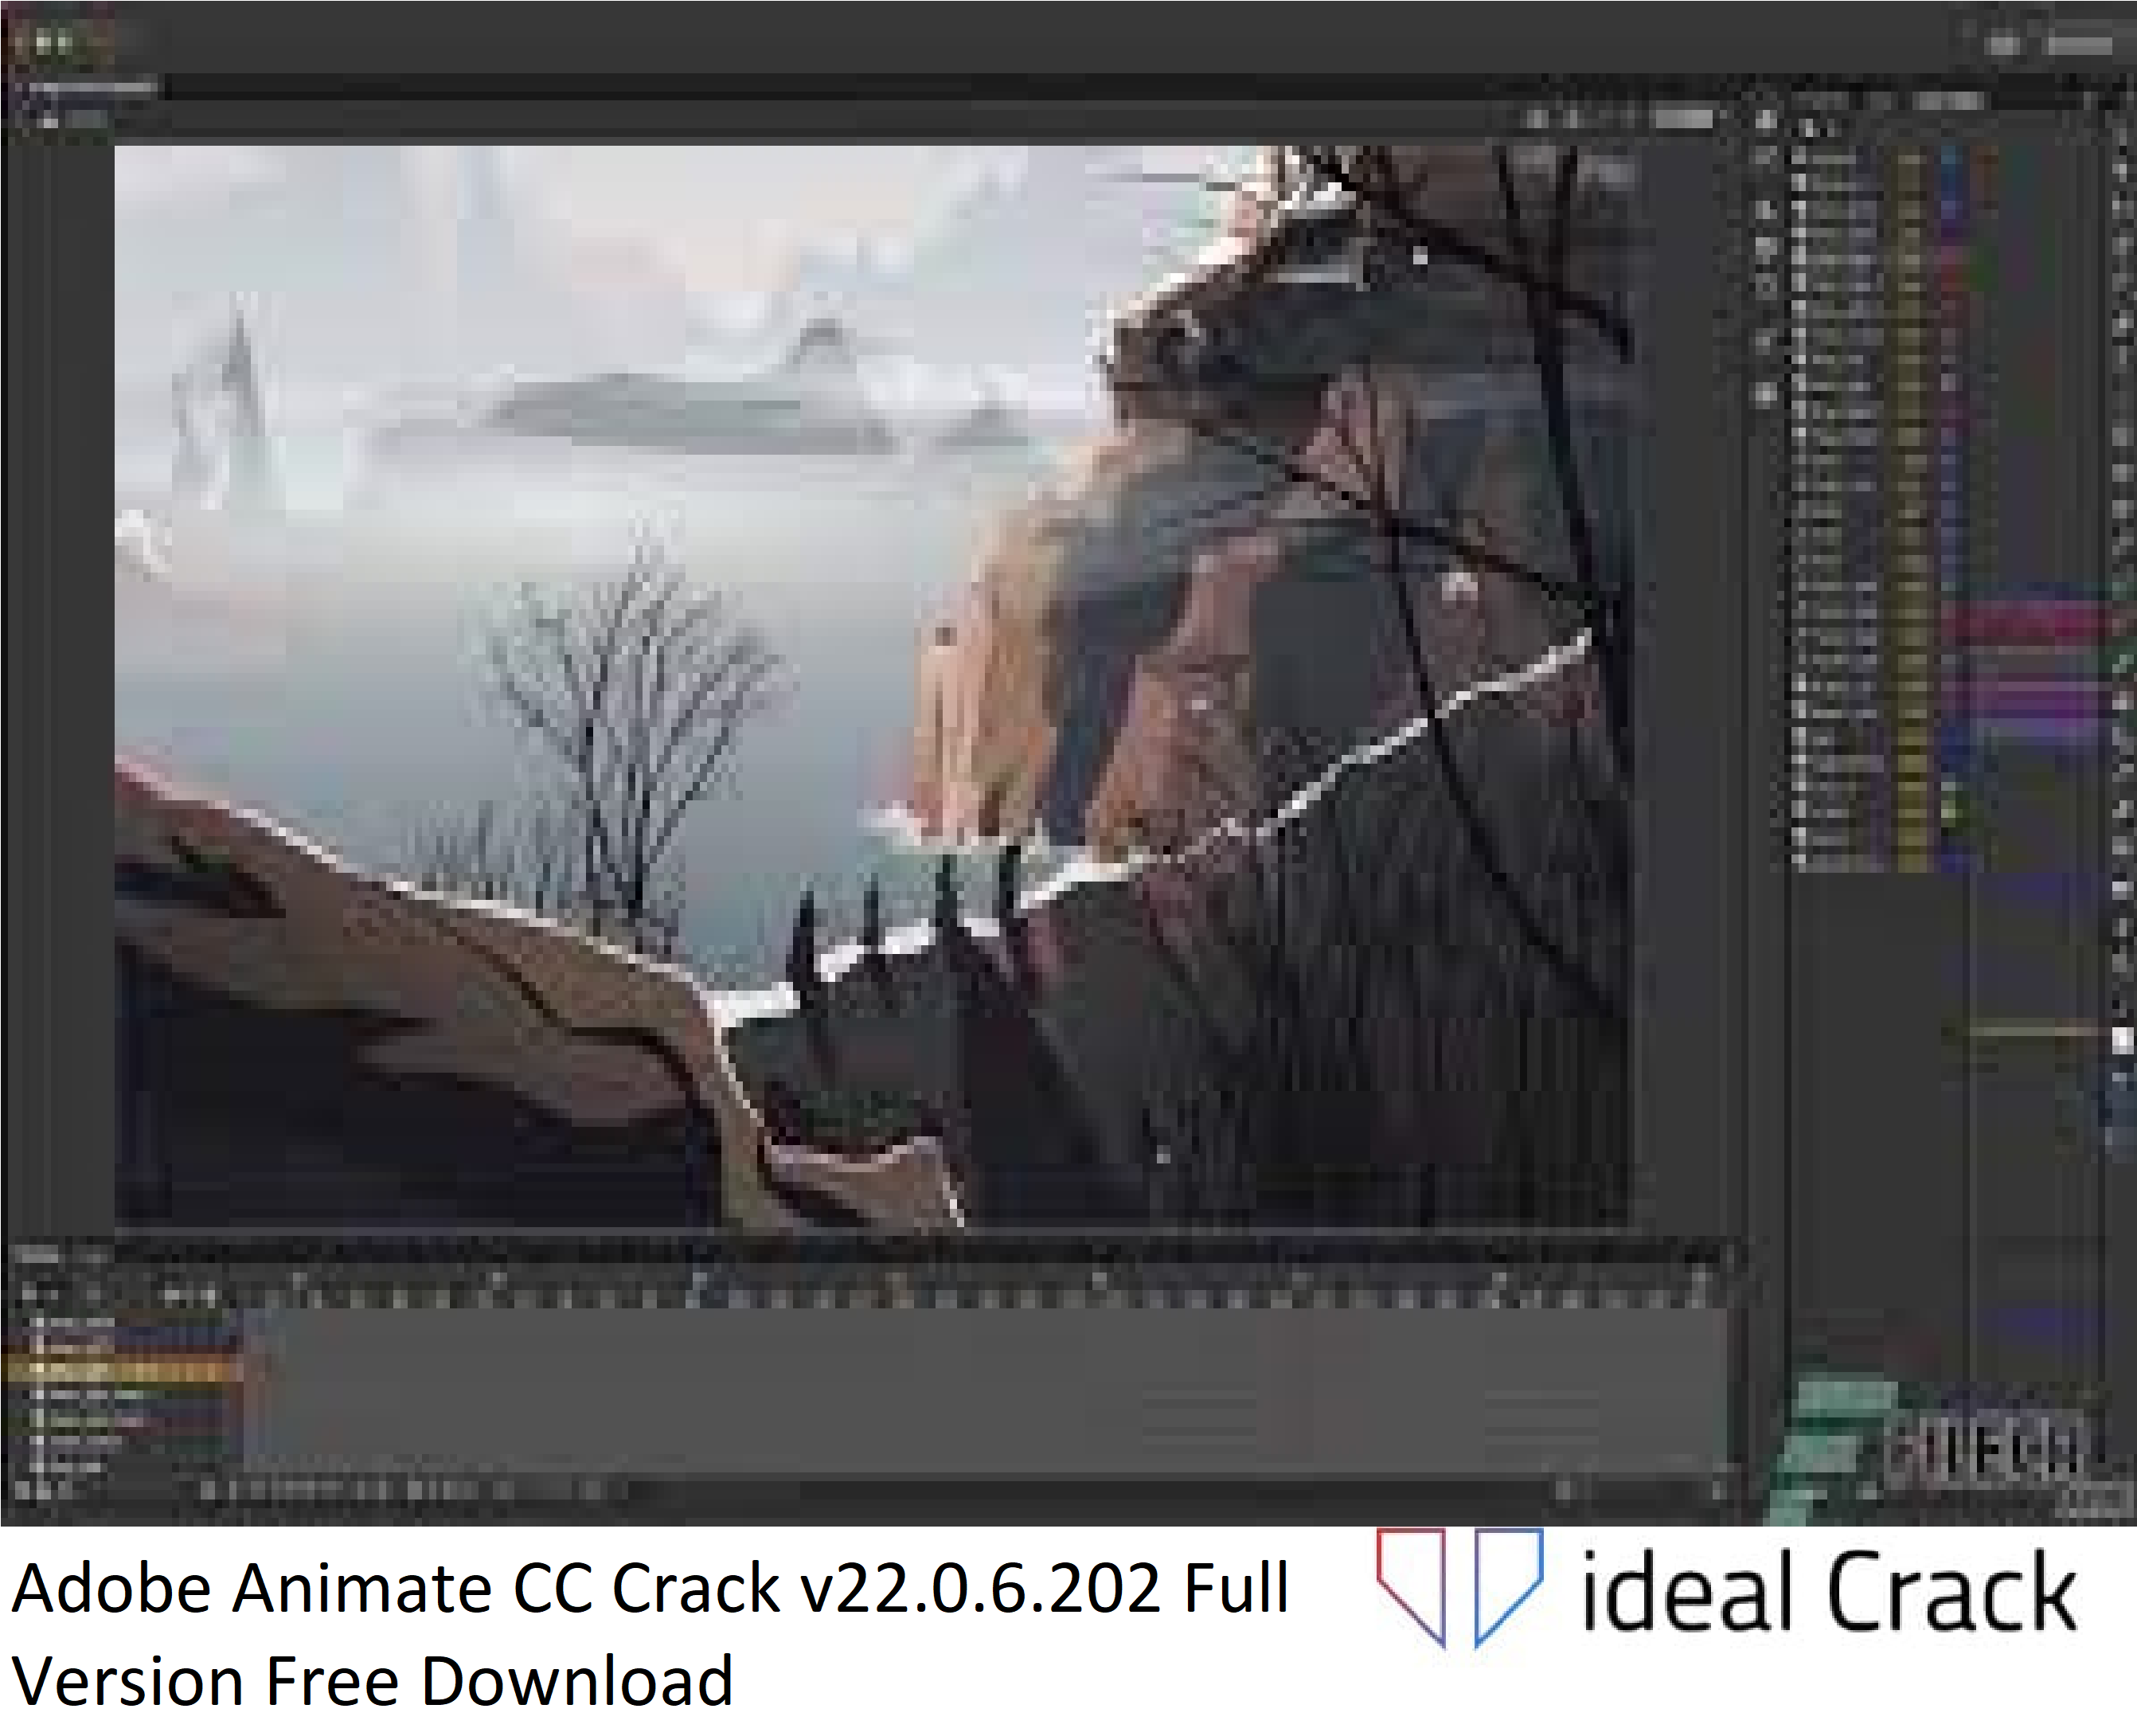 Adobe Animate CC Crack v22.0.6.202 Full Version Free Download